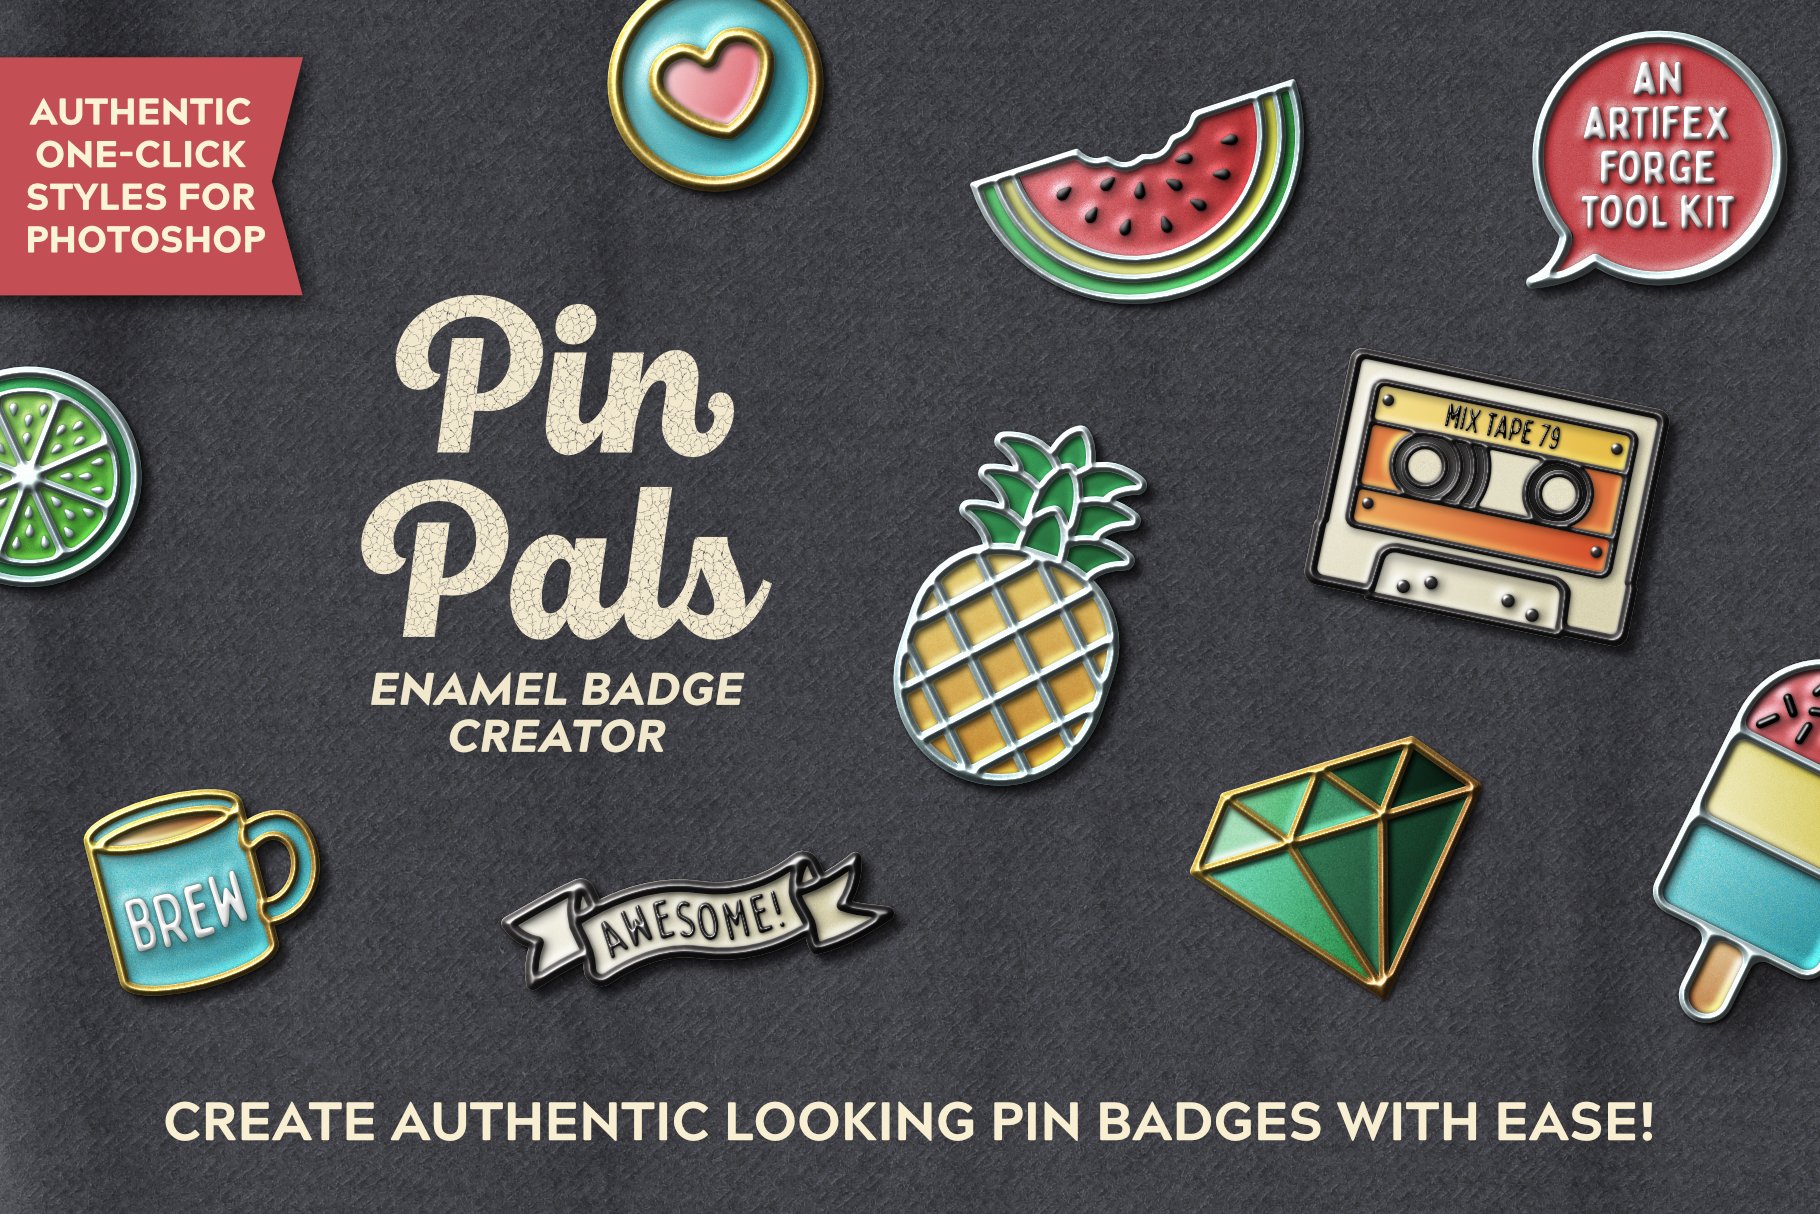 Pin Pals - Enamel Badge Creatorcover image.